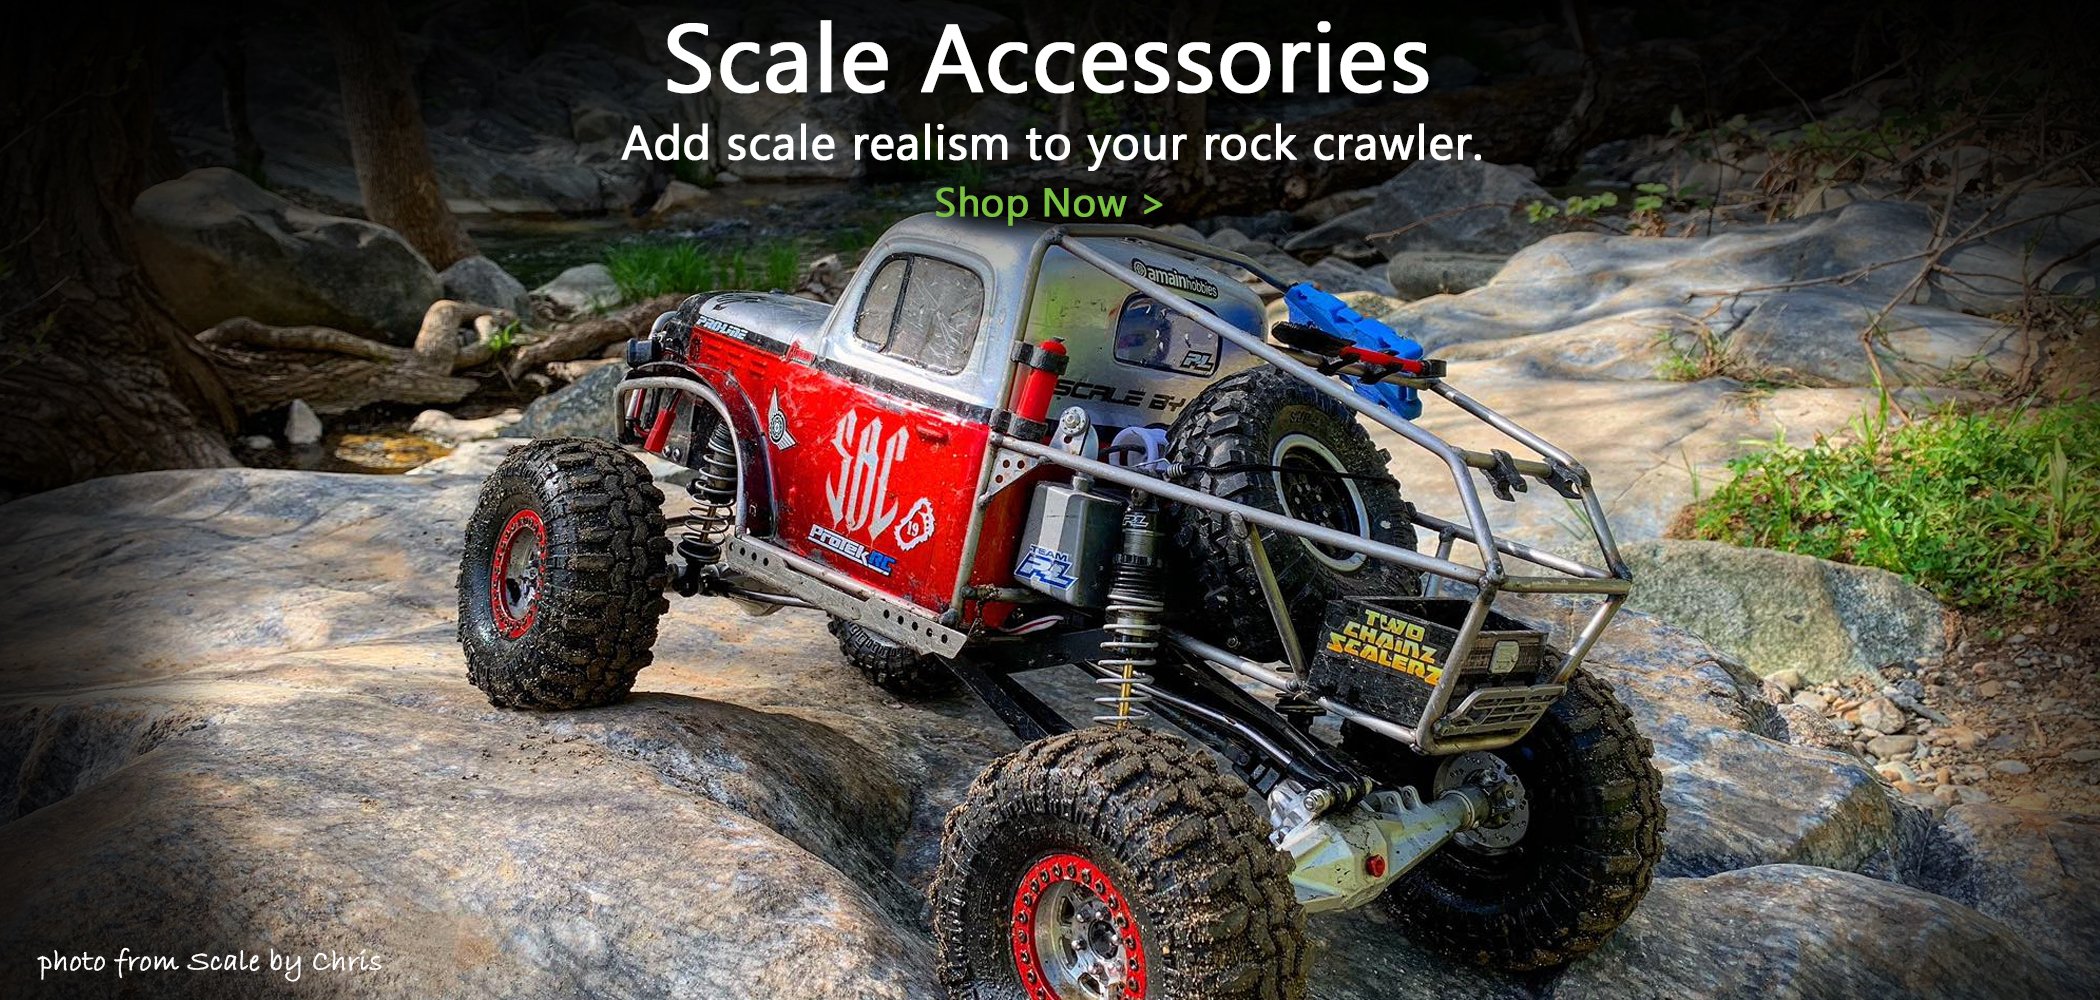 Scale Accessories